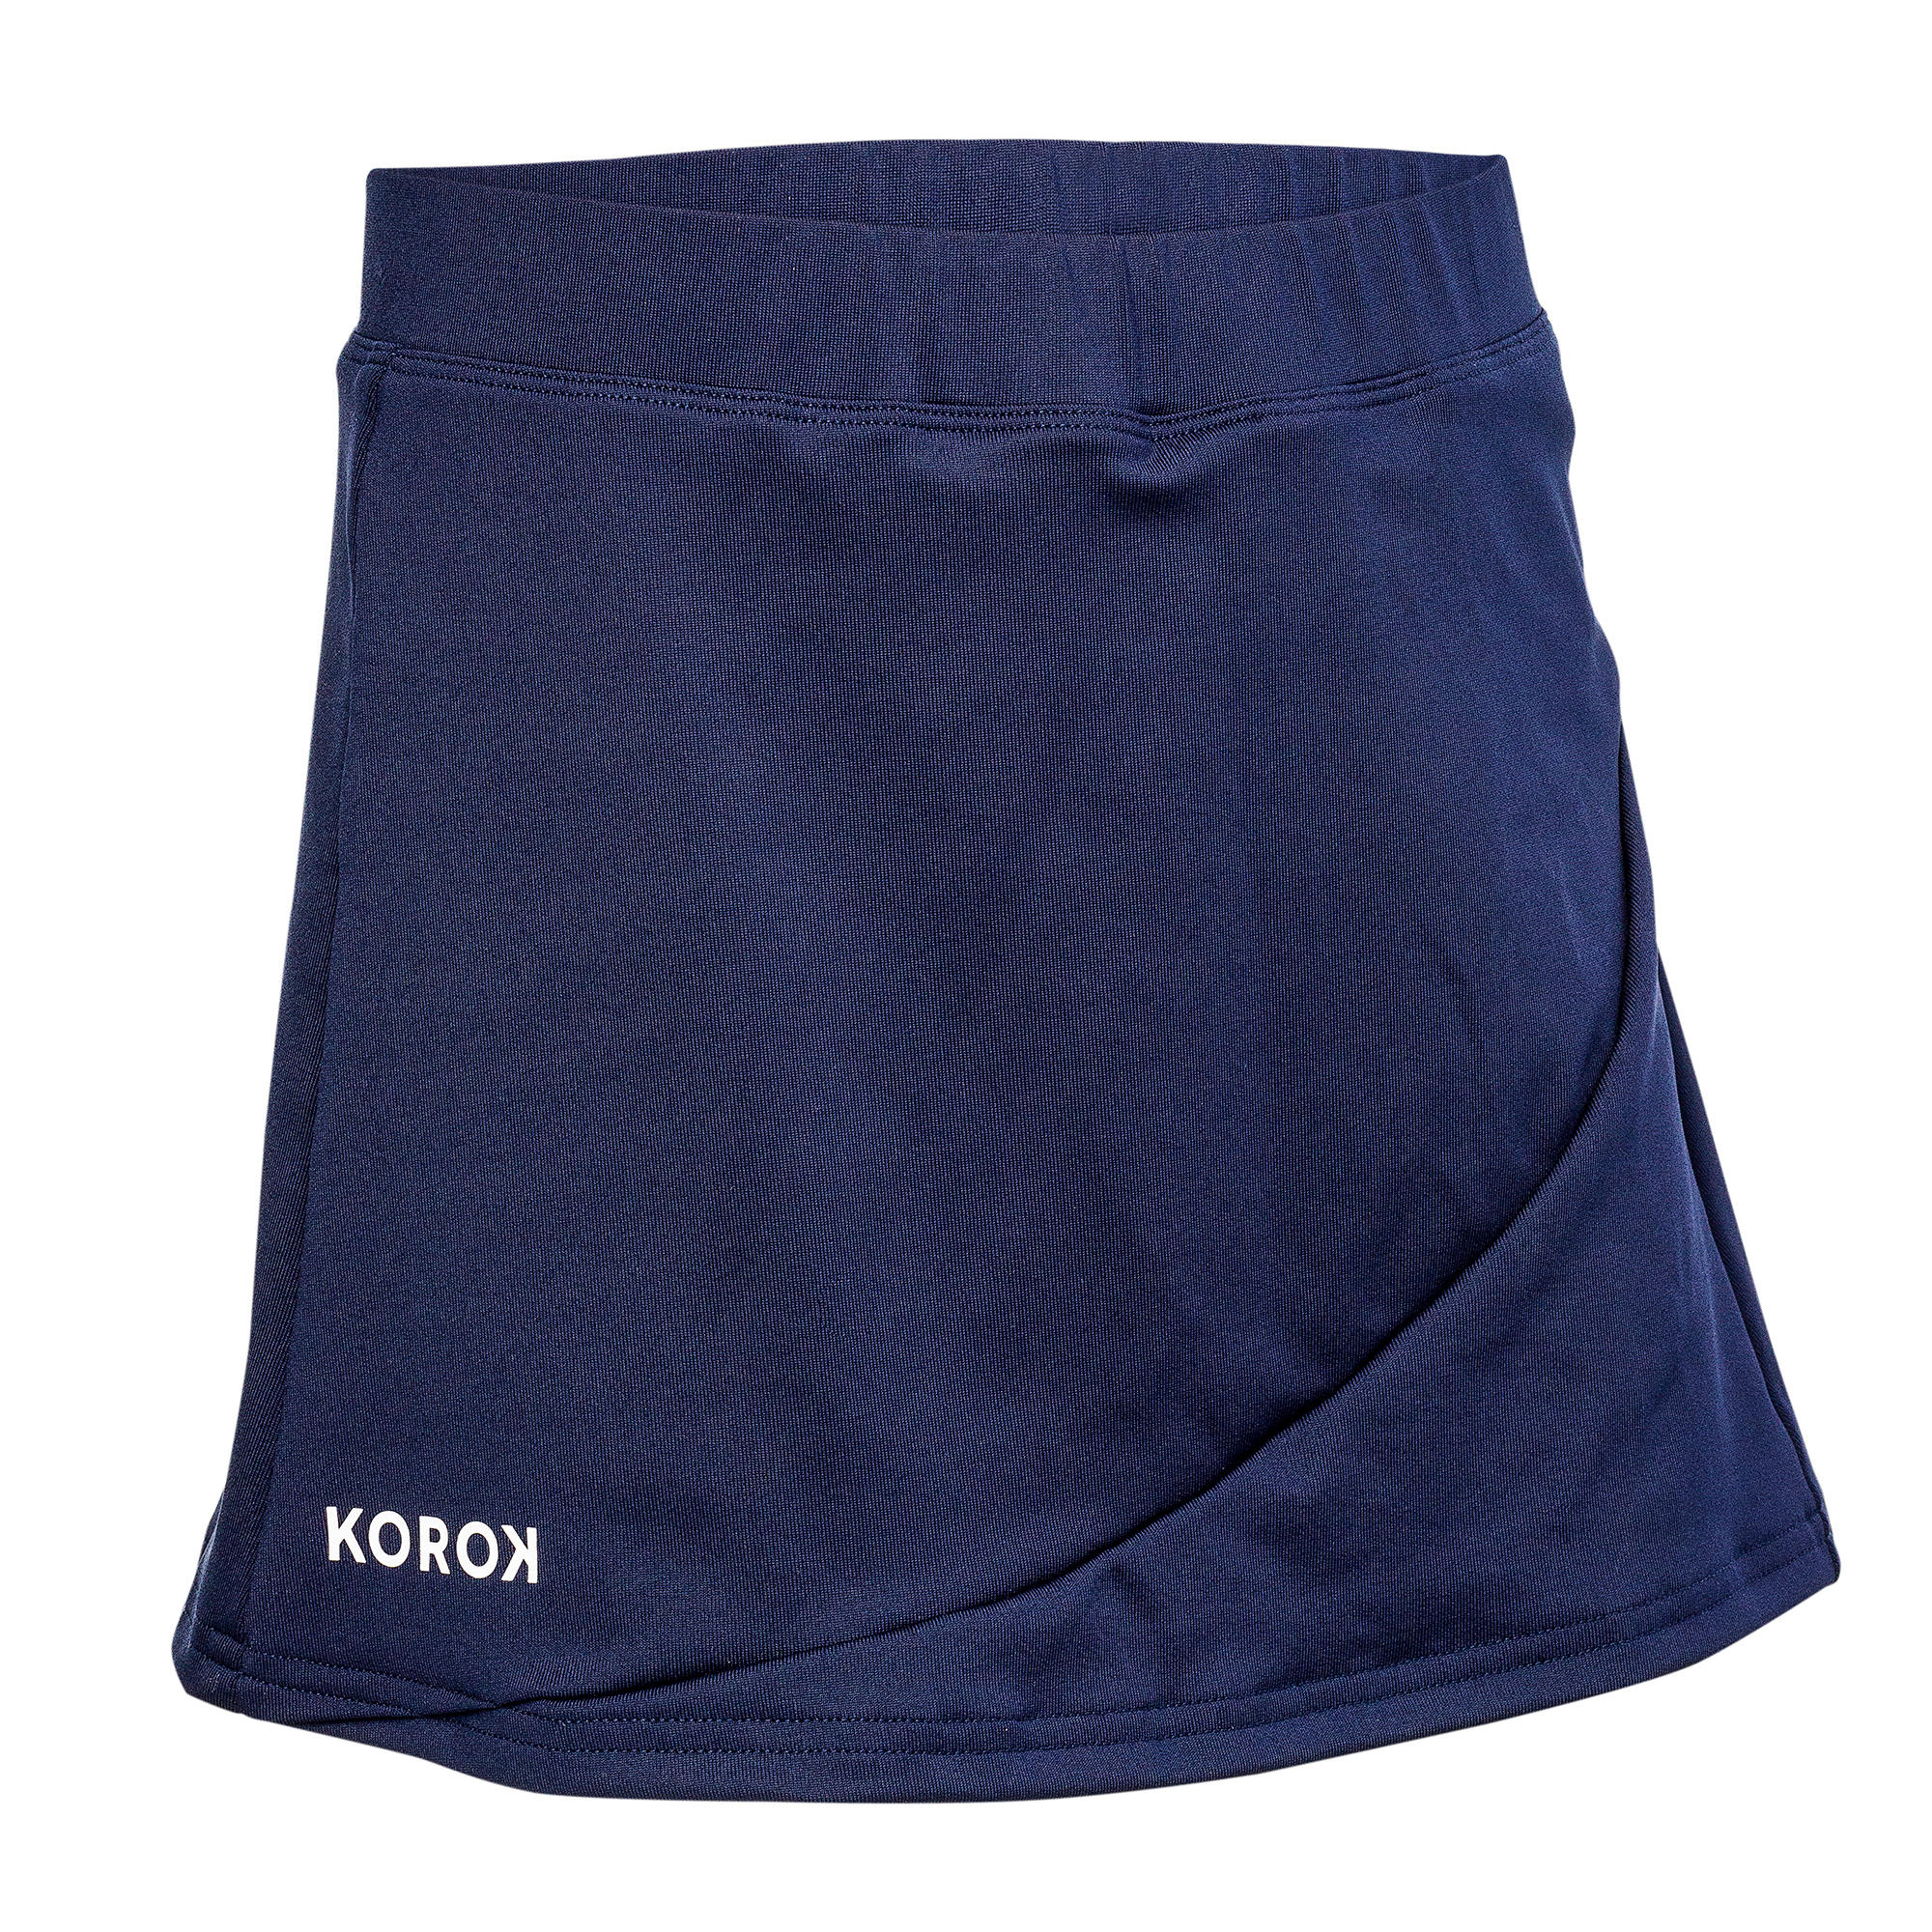 Girls' Field Hockey Skirt FH500 - Navy Blue 1/4